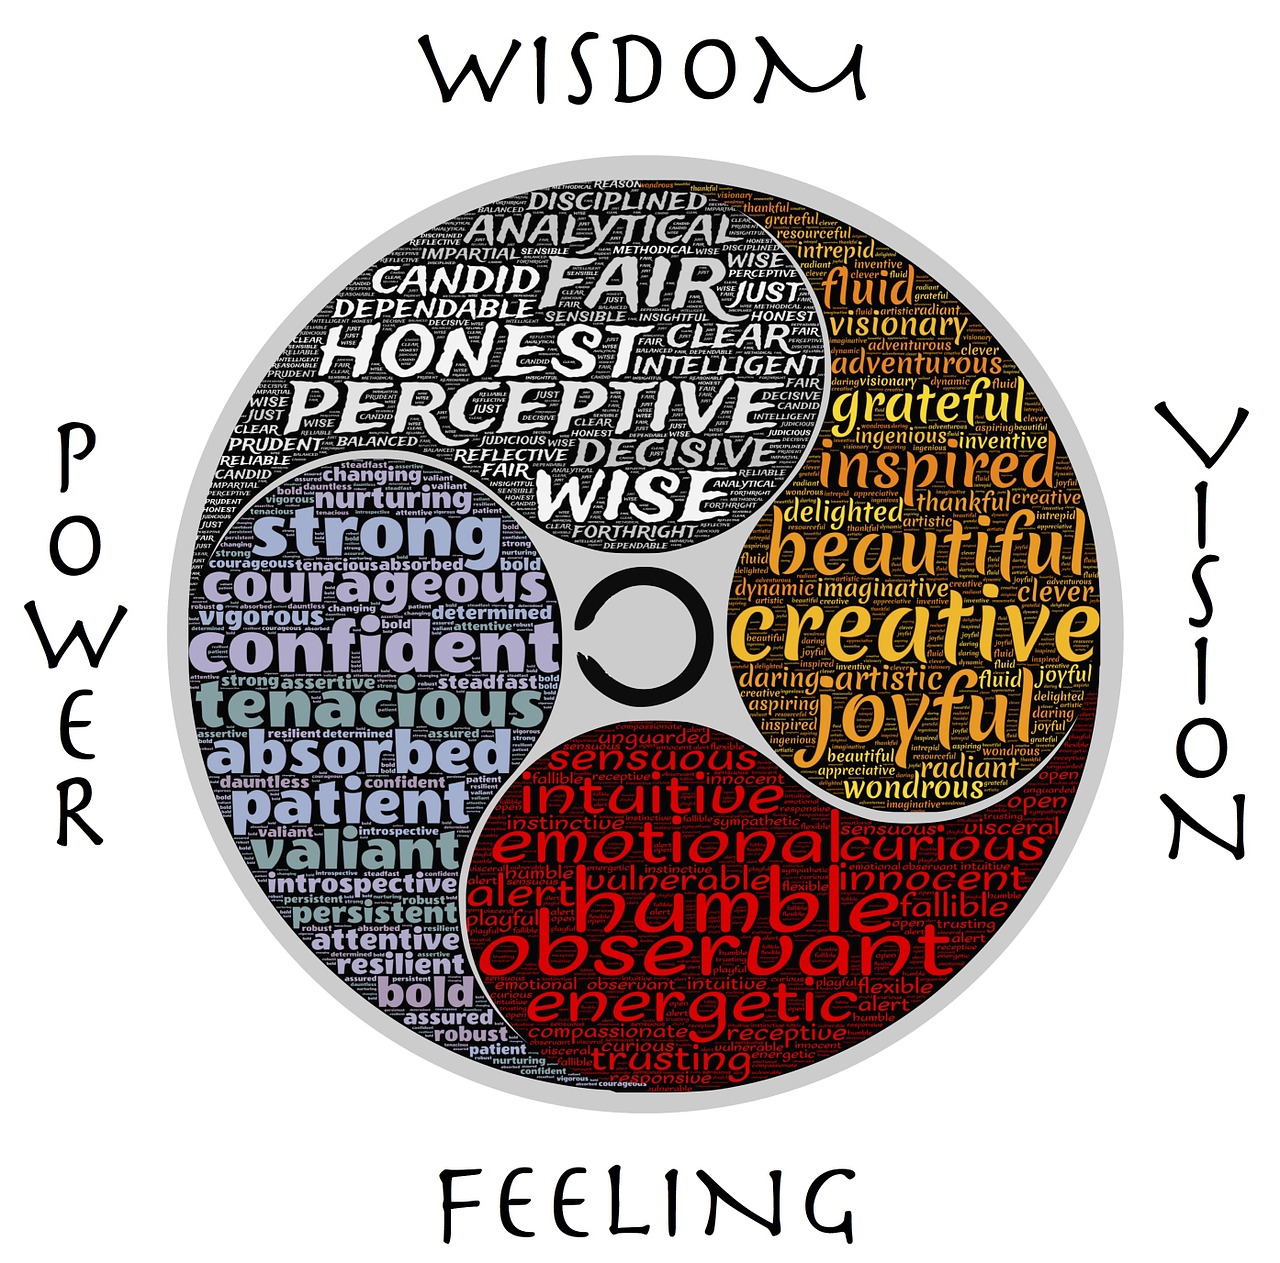 wisdom power vision free photo